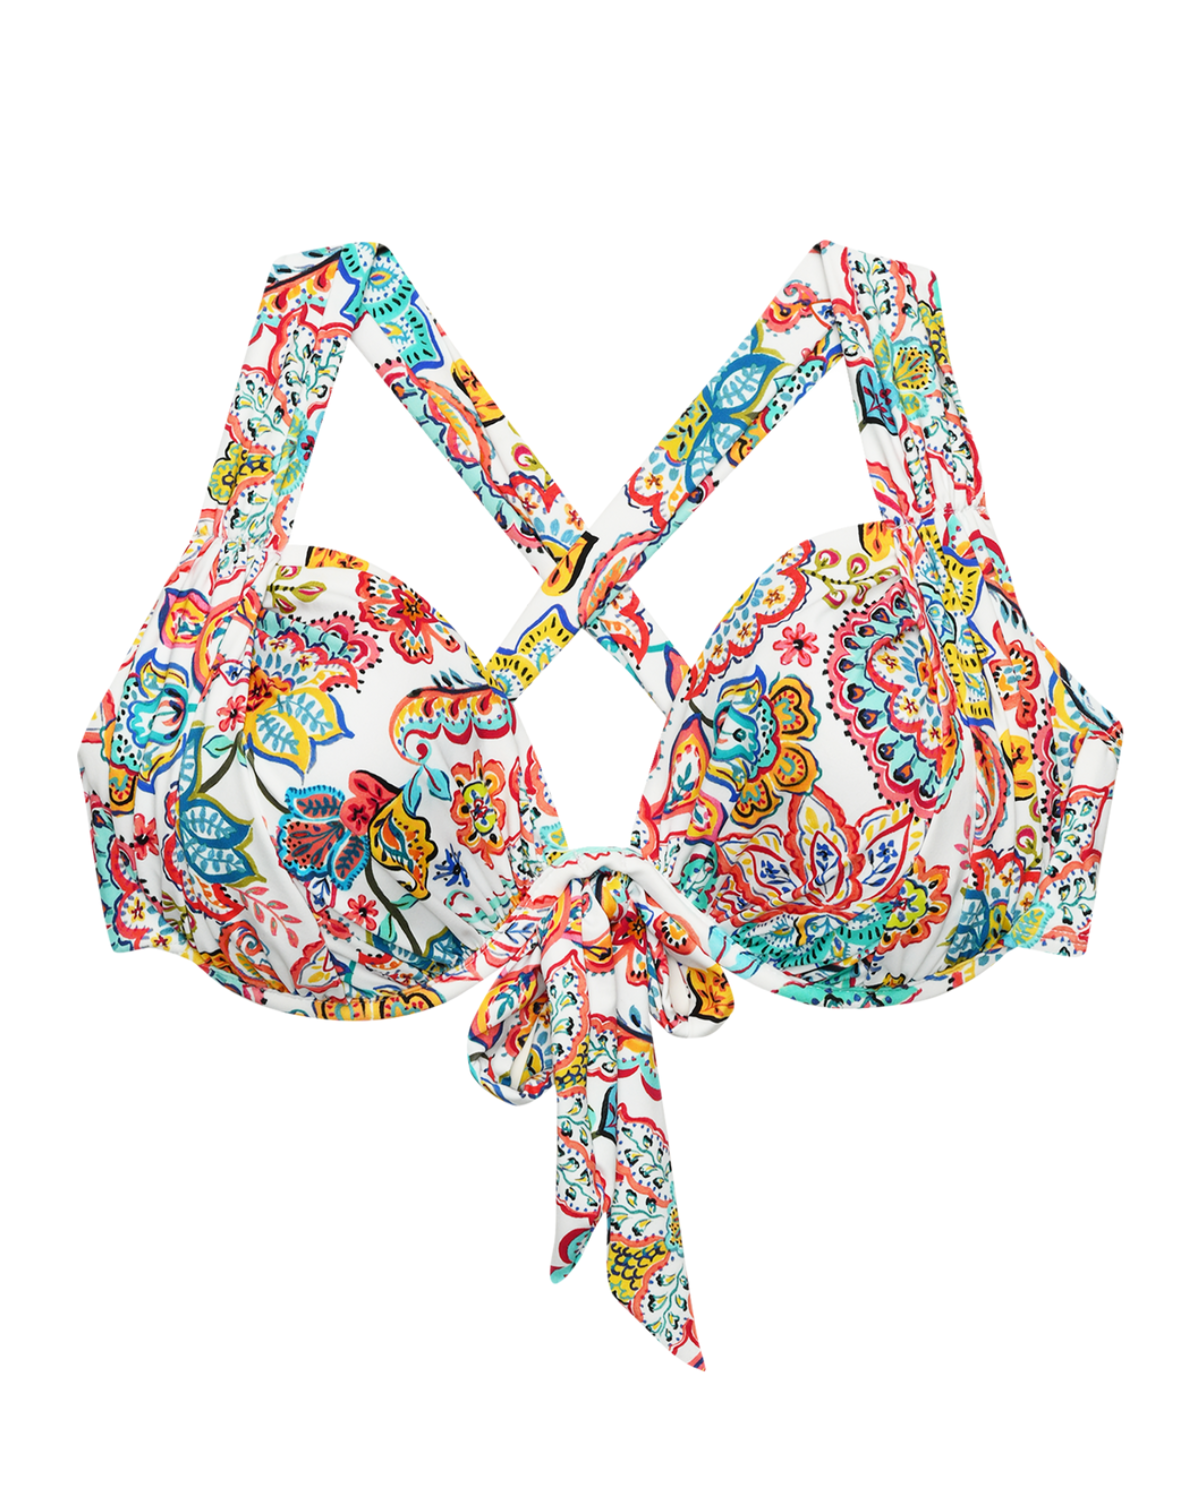 Model wearing an underwire bikini top in a white multicolored gypsy floral print